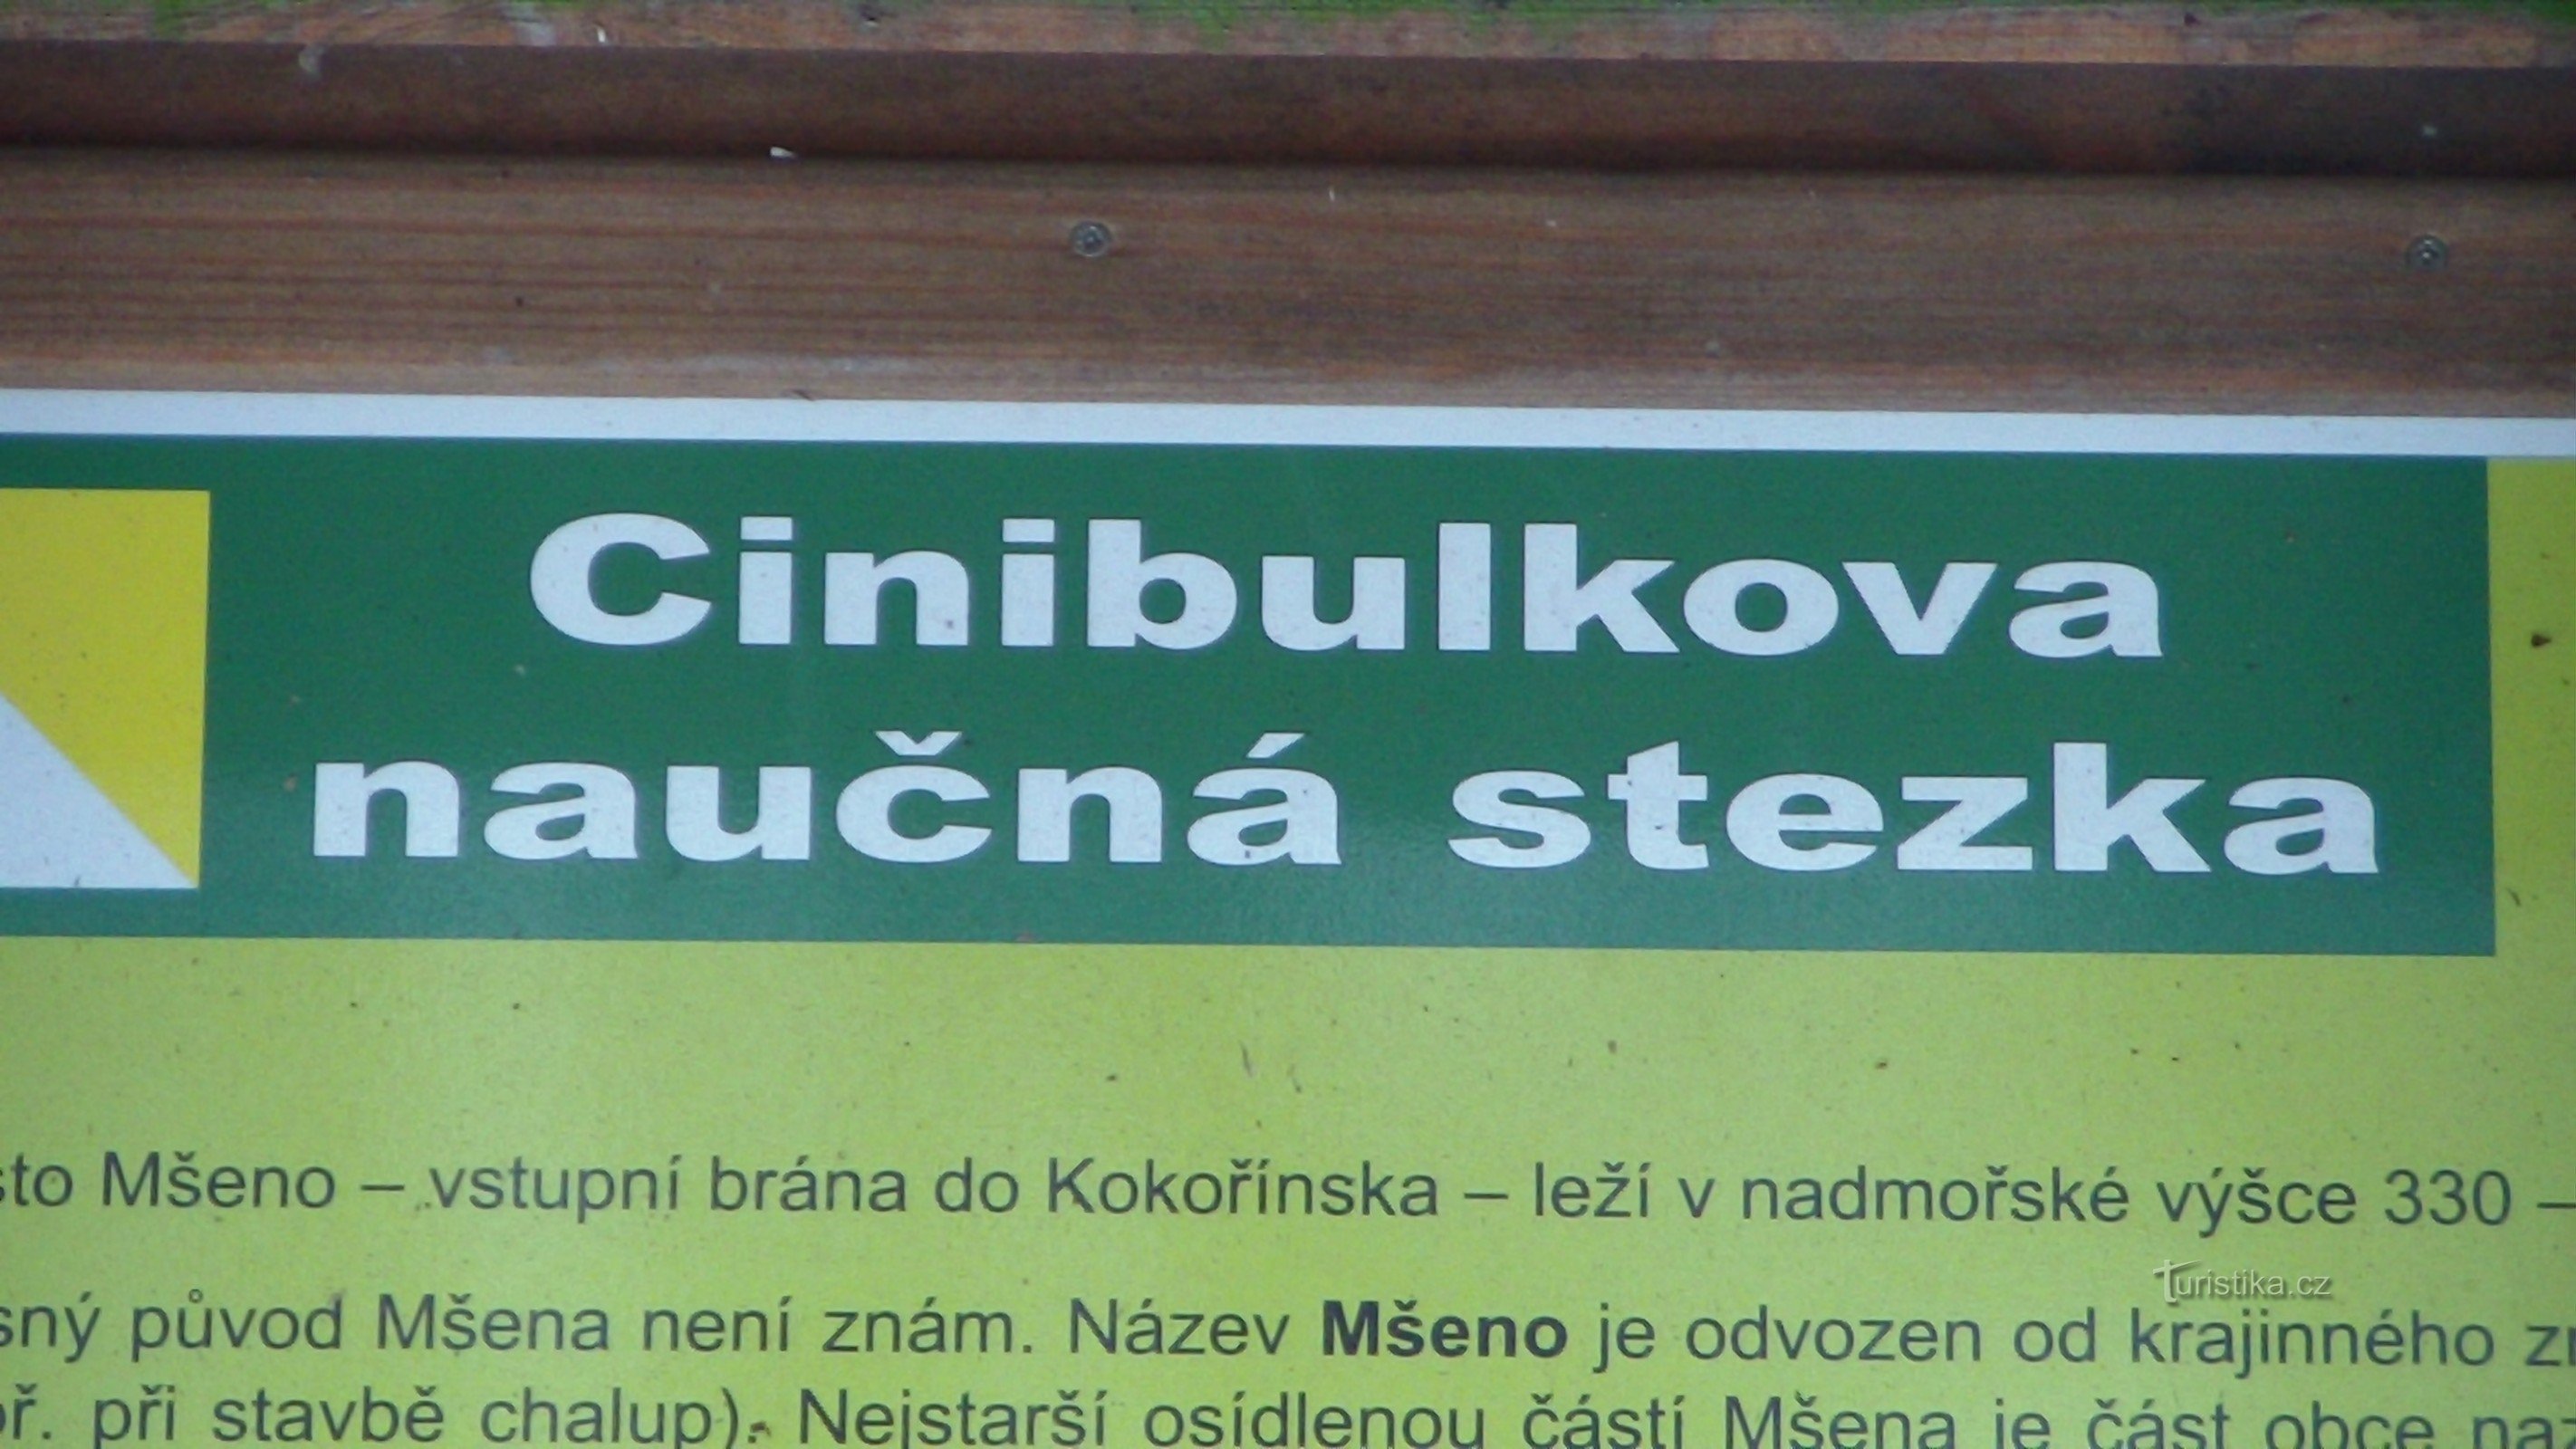 Cinibulkova trail